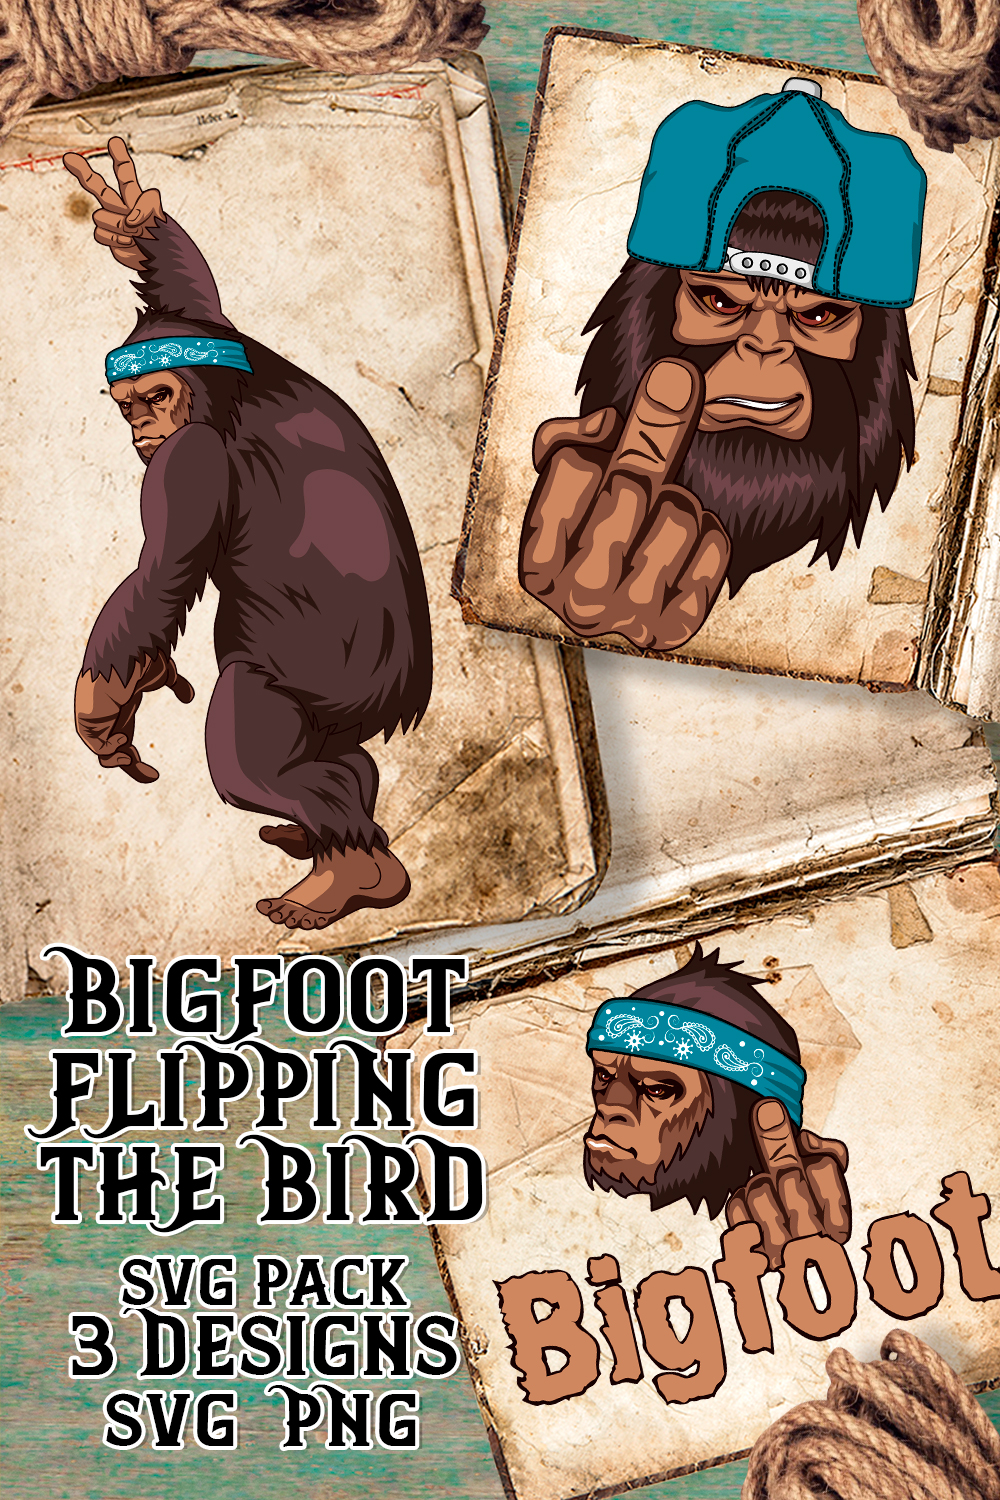 Bigfoot Flipping The Bird Svg - Pinterest.